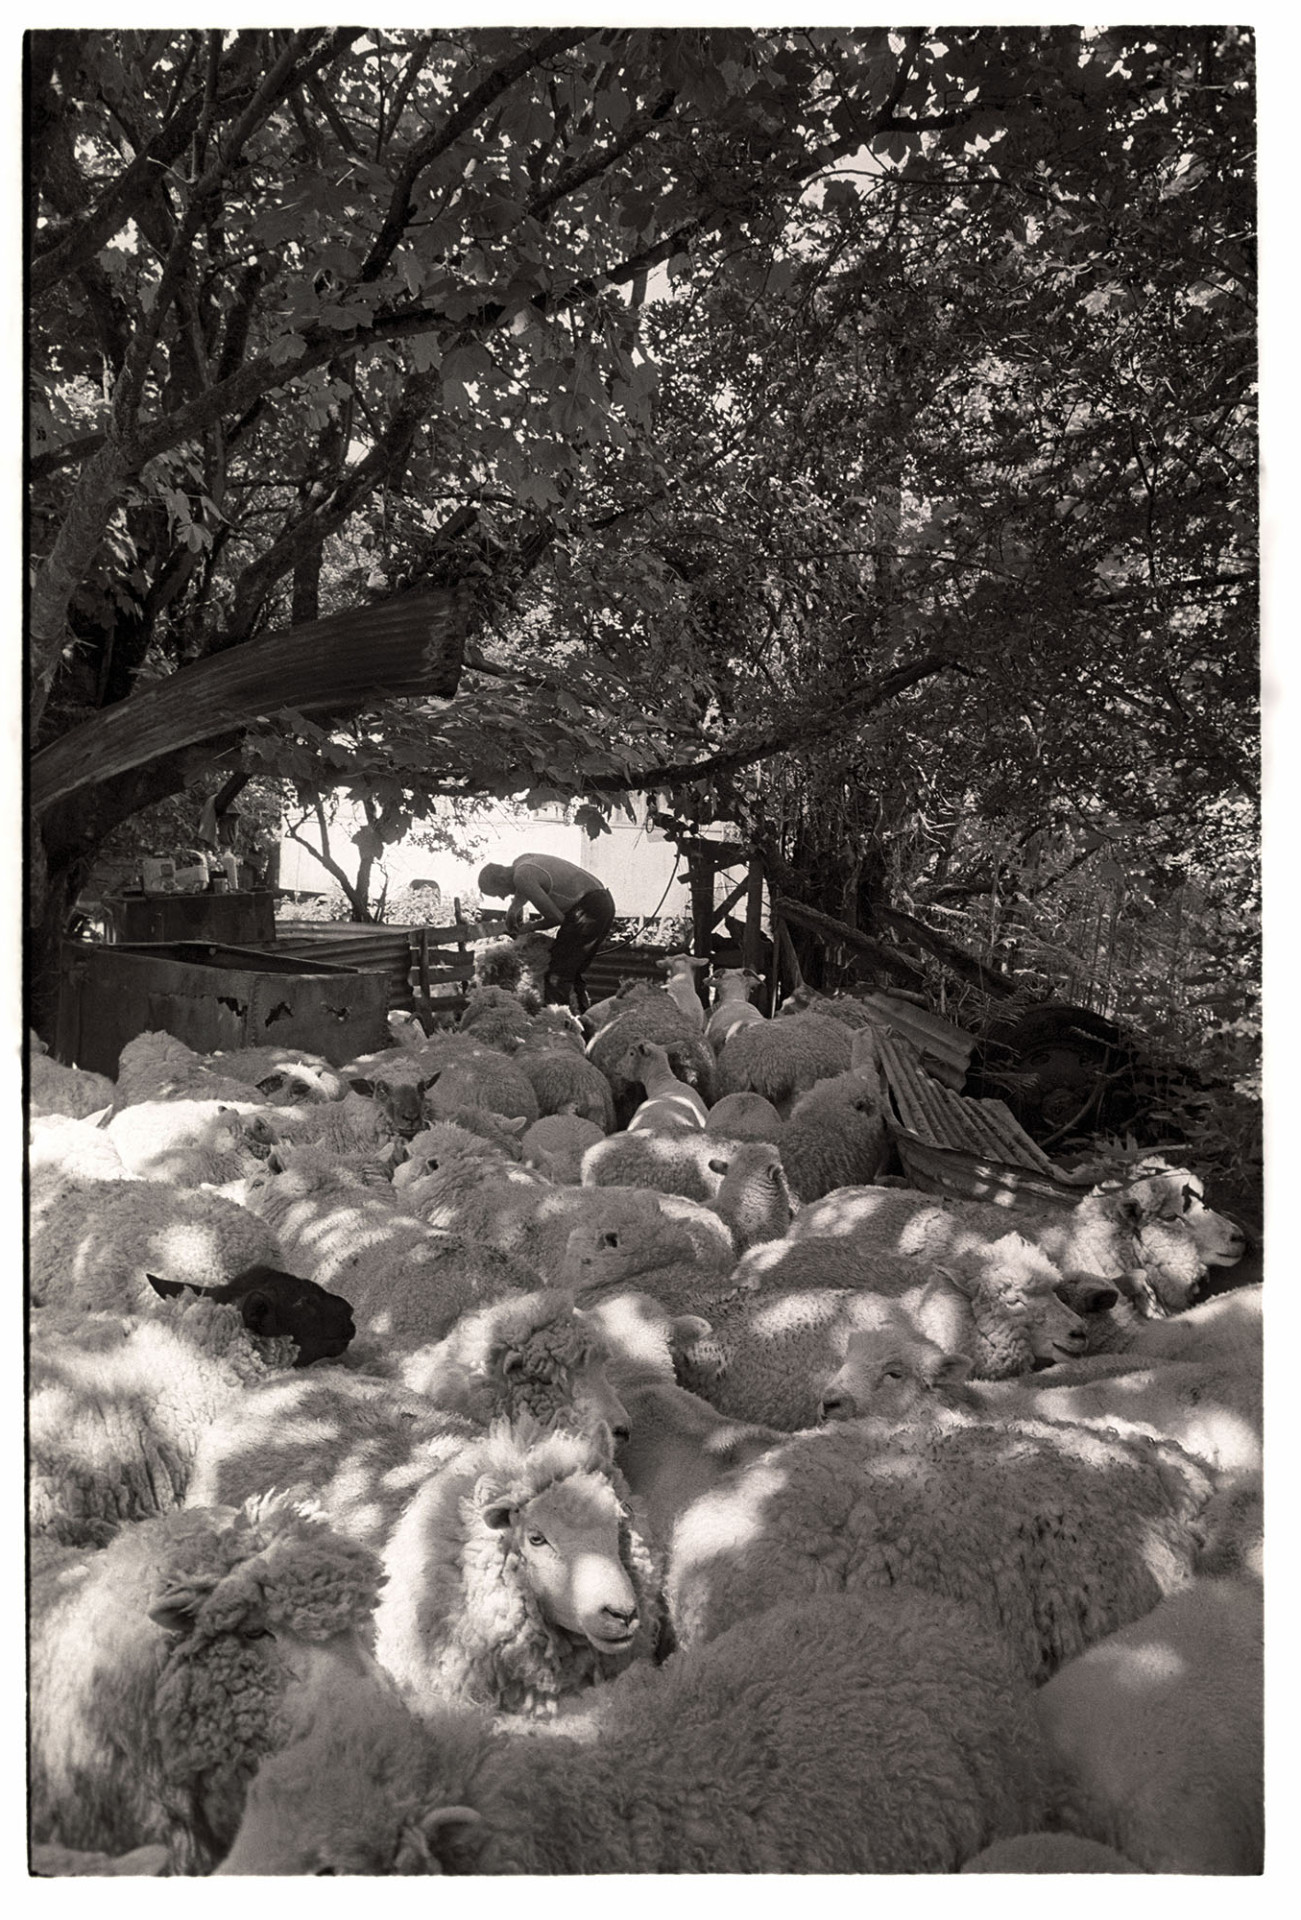 Farmer shearing sheep under trees. 
[Cyril Bennett shearing sheep under trees at Cuppers Piece, Beaford.]